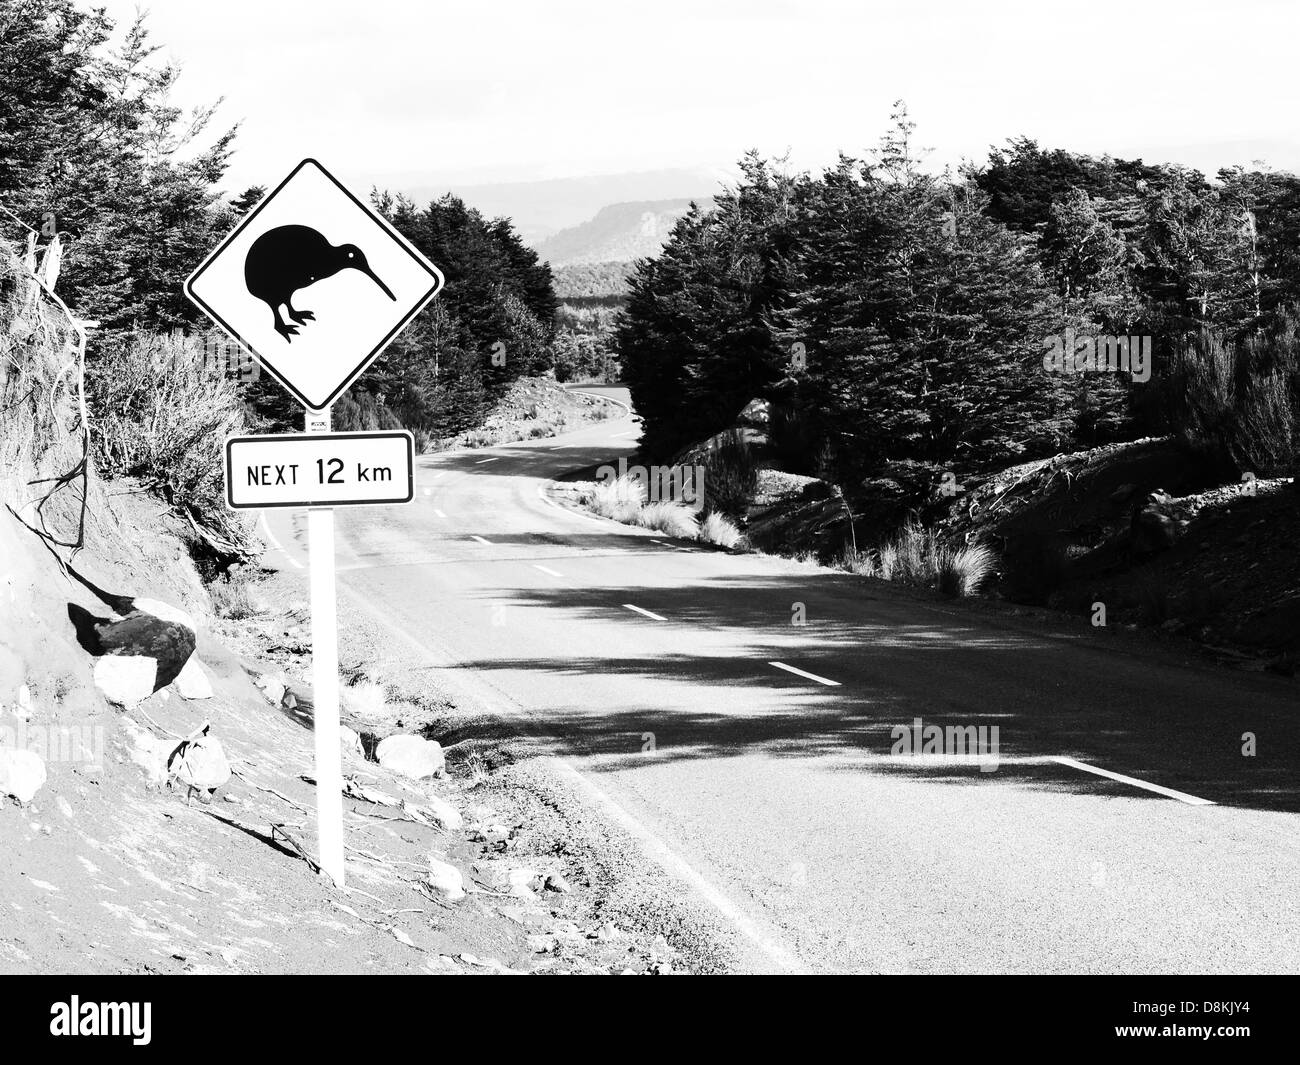 Kiwi berg -Fotos und -Bildmaterial in hoher Auflösung – Alamy